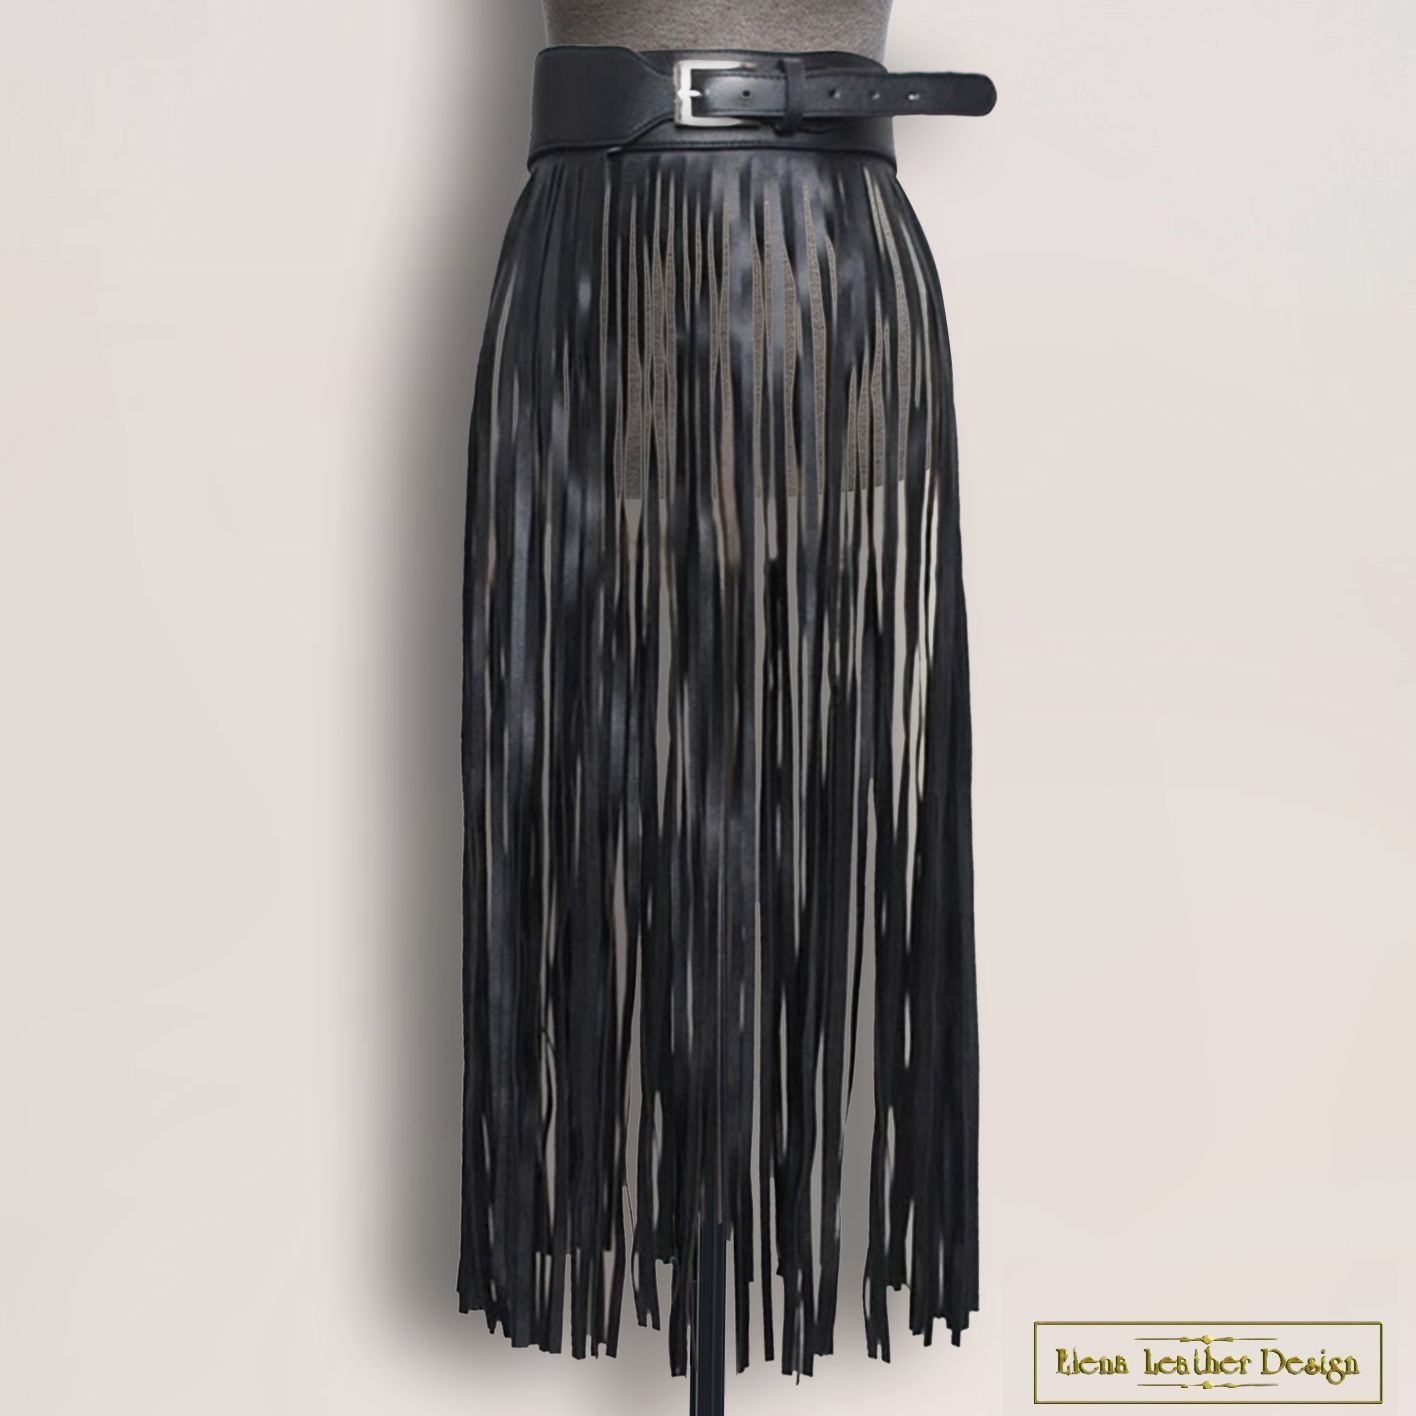 Fringe skirt made of genuine leather/suede (any color), Skirts, Podolsk,  Фото №1